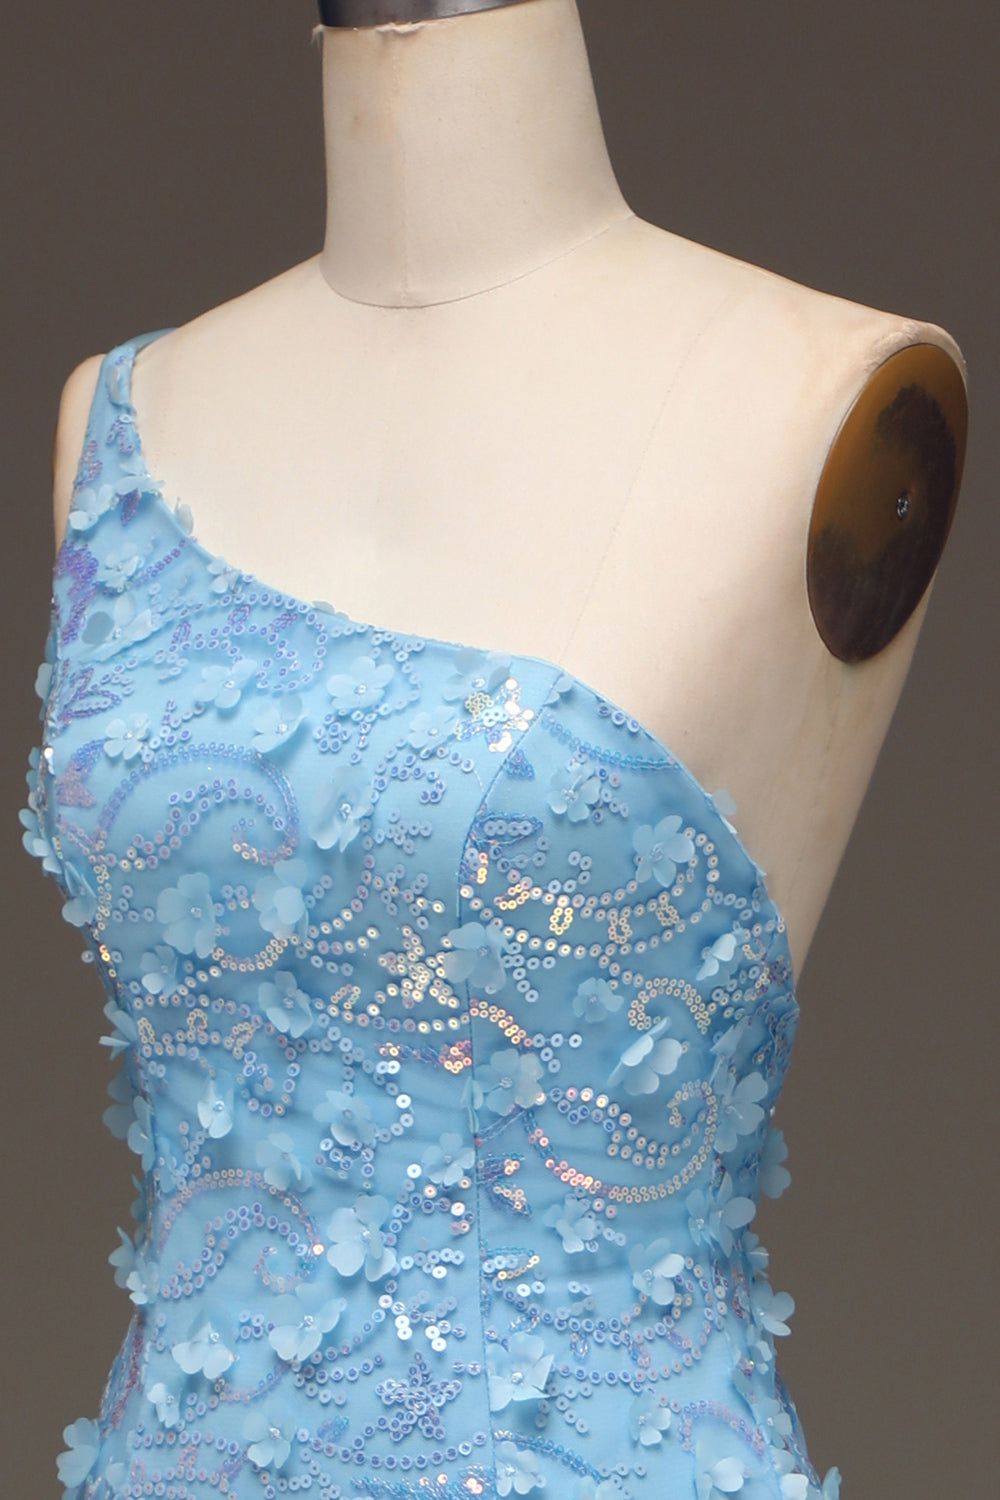 Light Blue Mermaid One Shoulder Side Slit Sequin Prom Dress with Appliques